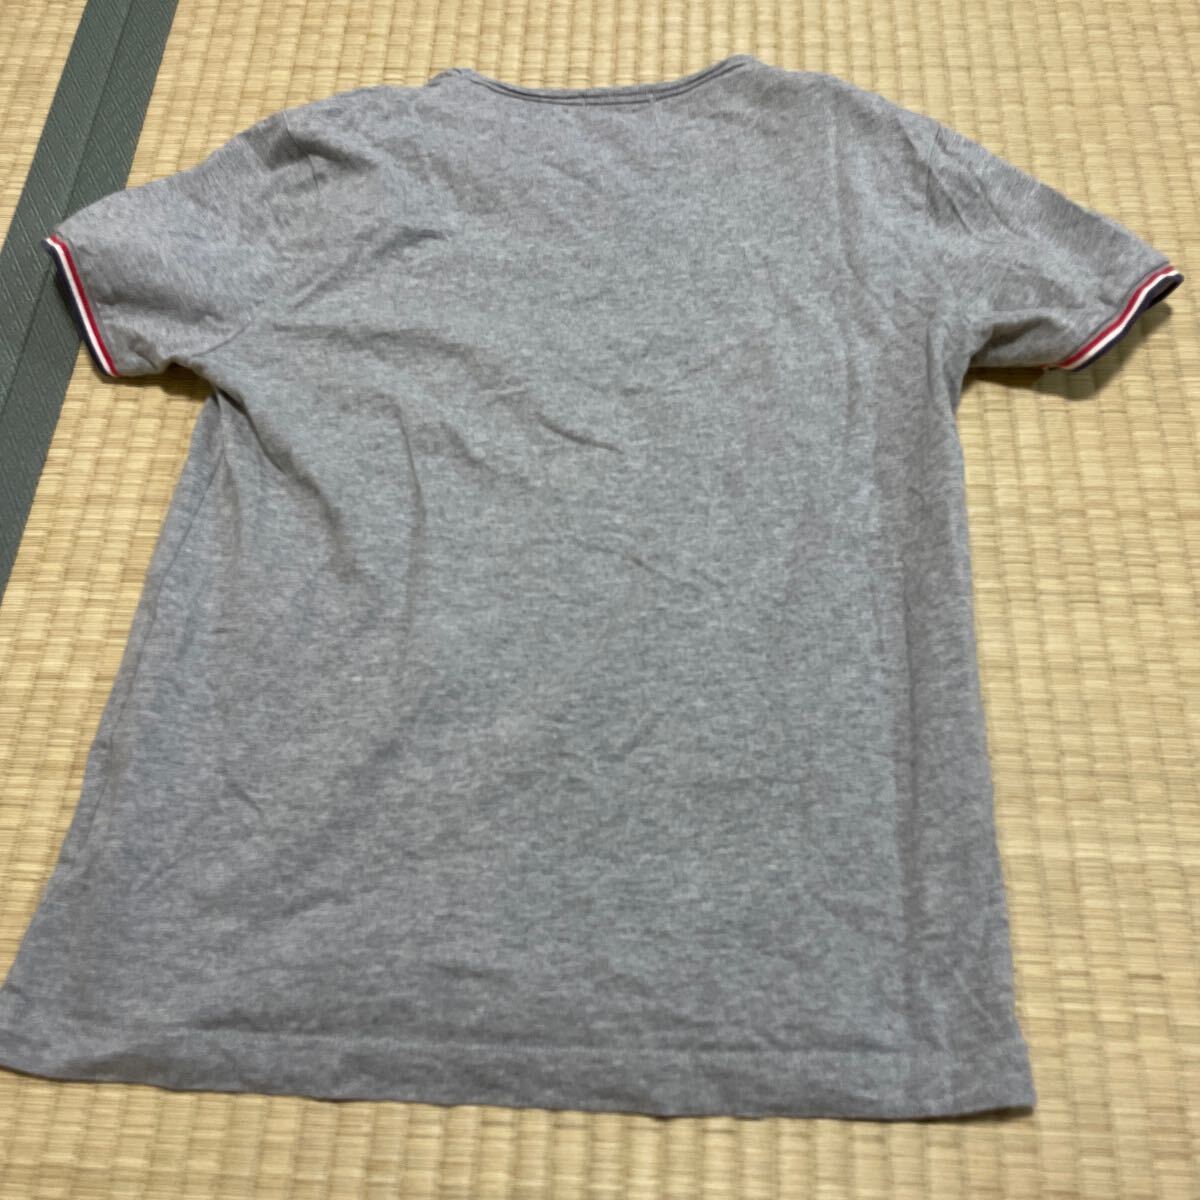  Moncler MONCLER short sleeves T-shirt XS size 